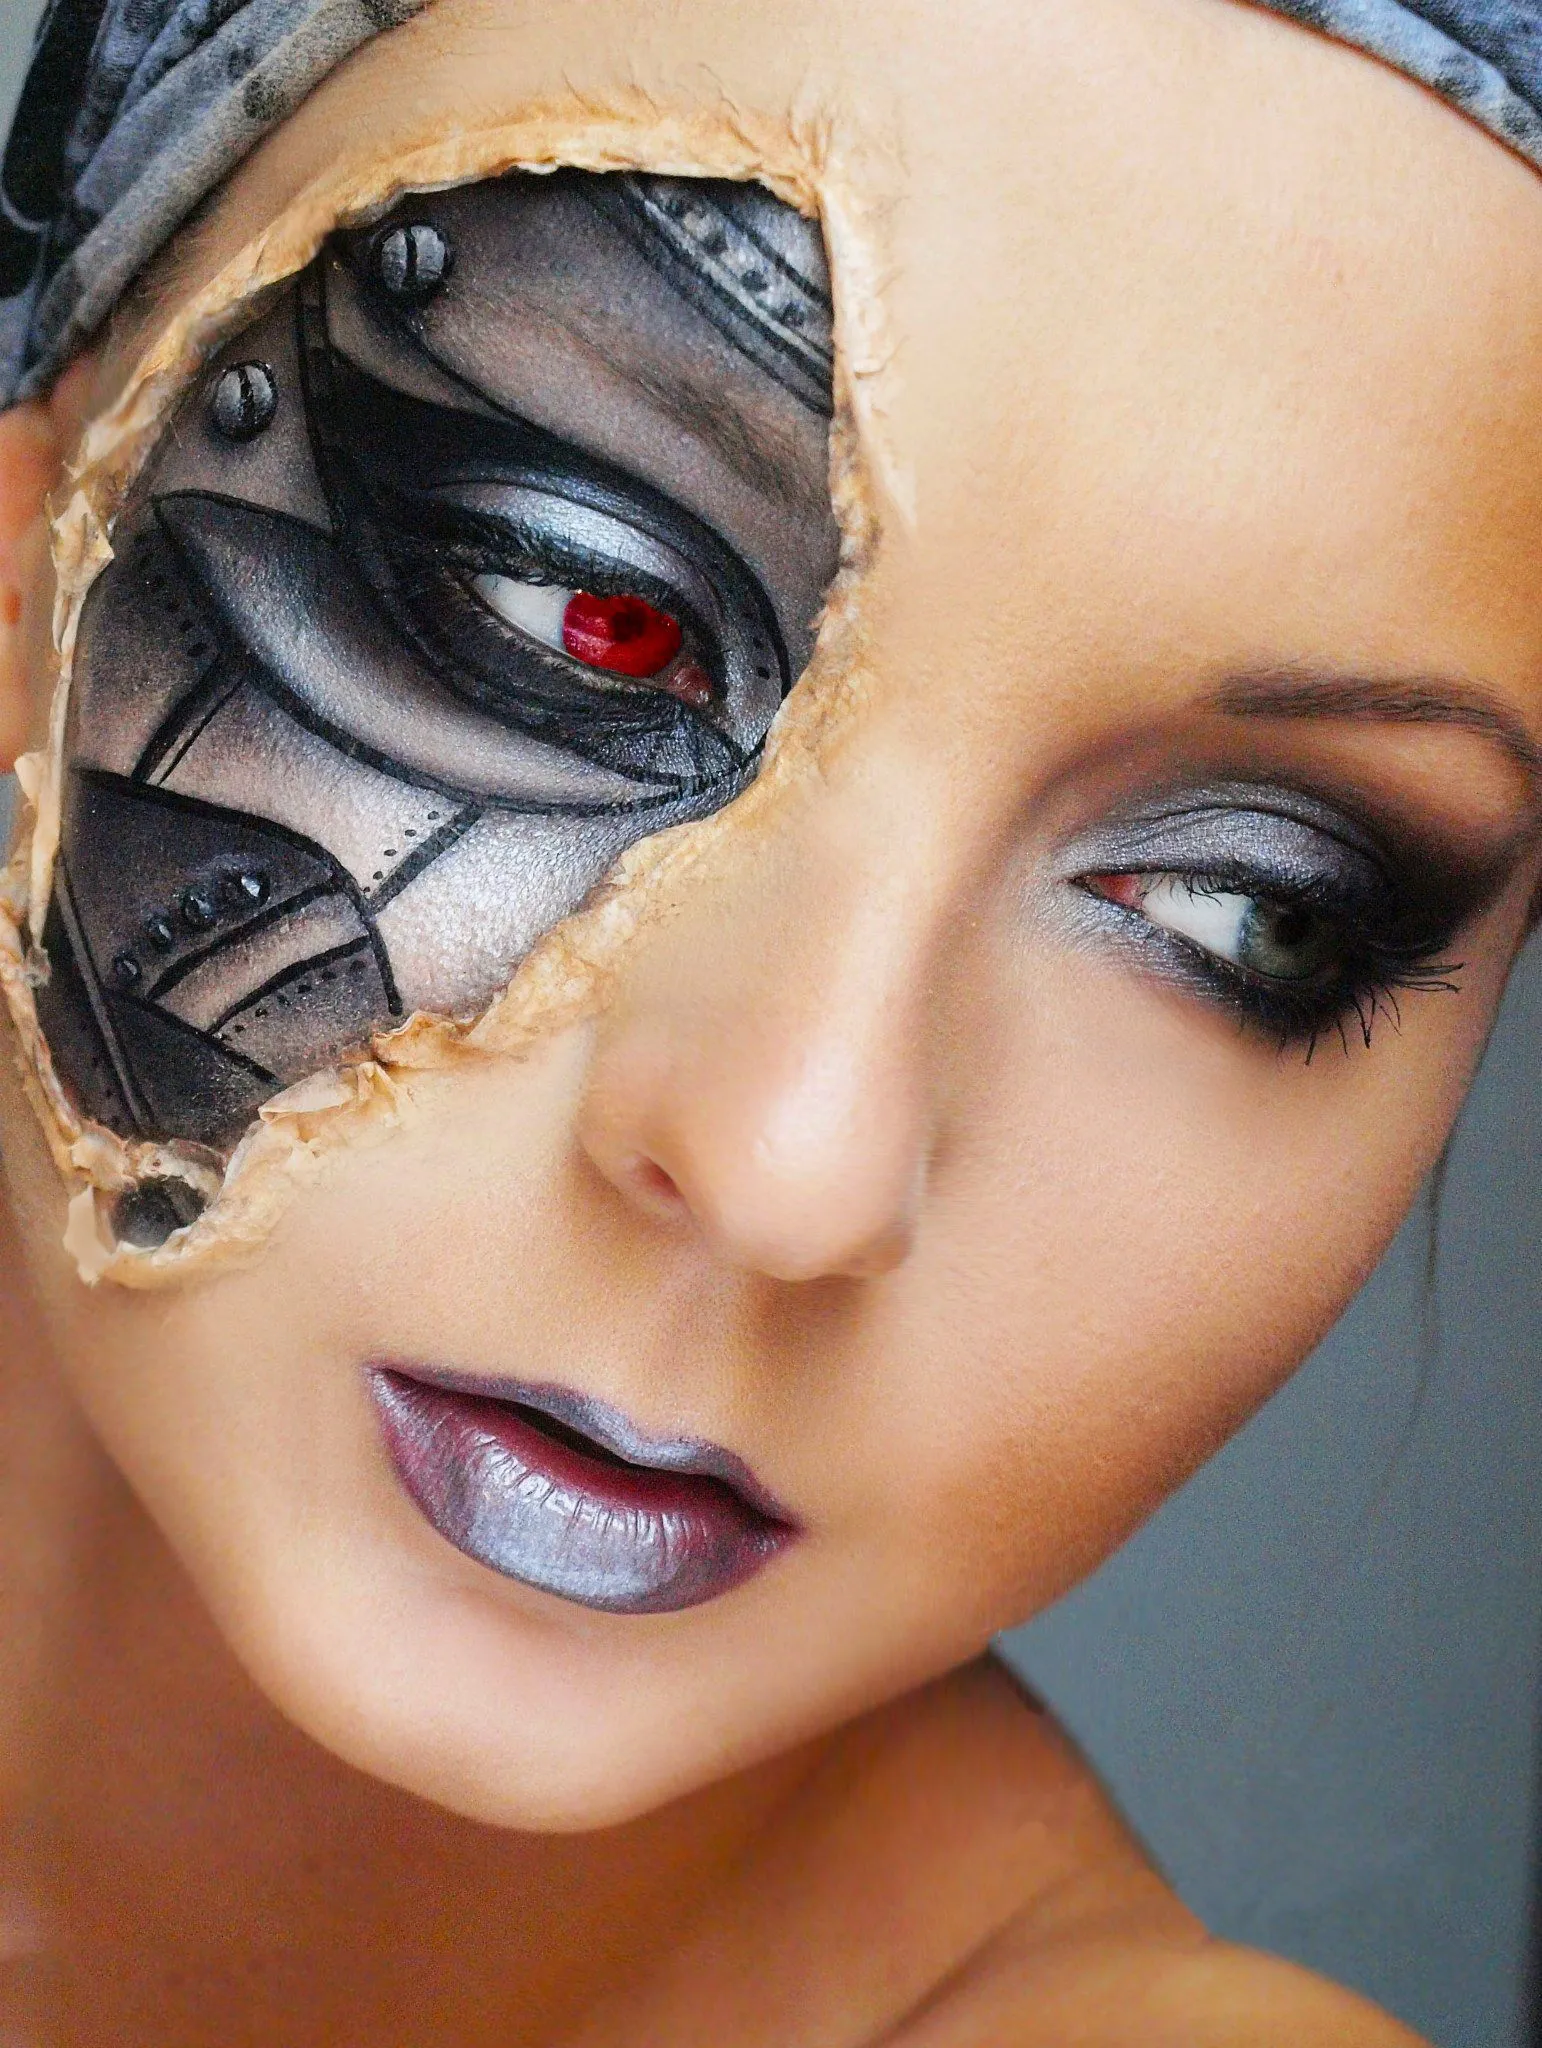 25 Ideas para tener un maquillaje aterrador en halloween